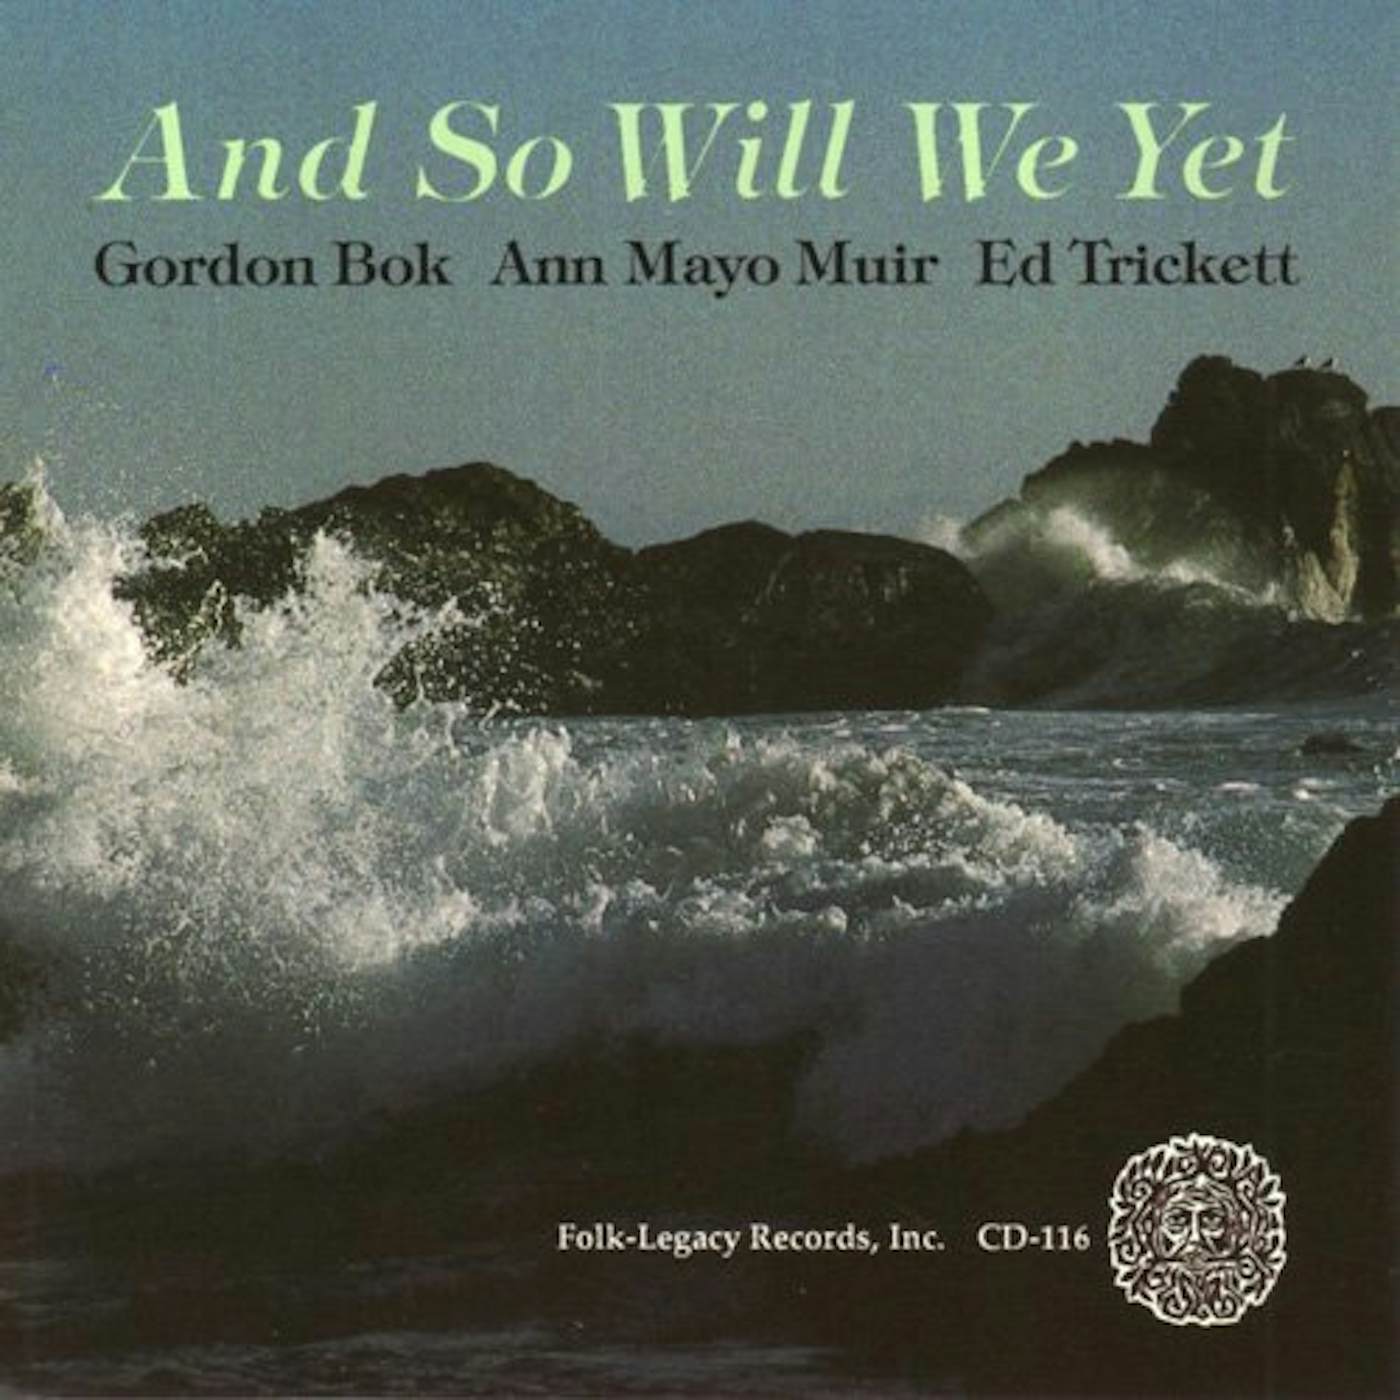 Gordon Bok, Ed Trickett, Ann Mayo Muir AND SO WILL WE YET CD